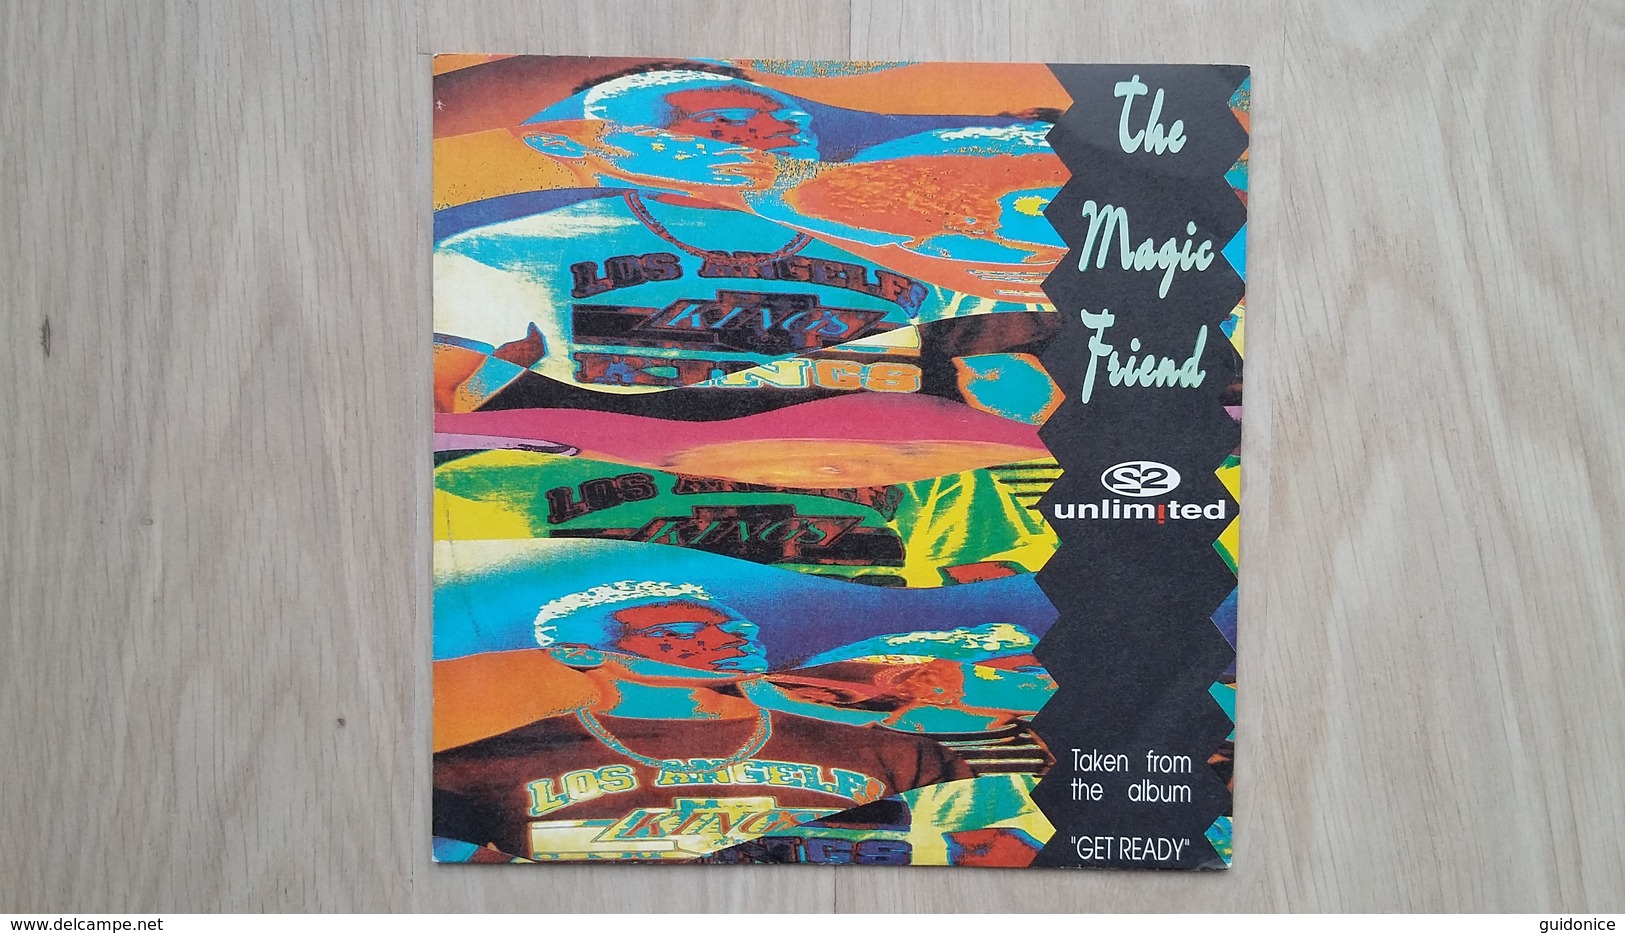 2 Unlimited - The Magic Friend - Vinyl-Single - Disco, Pop